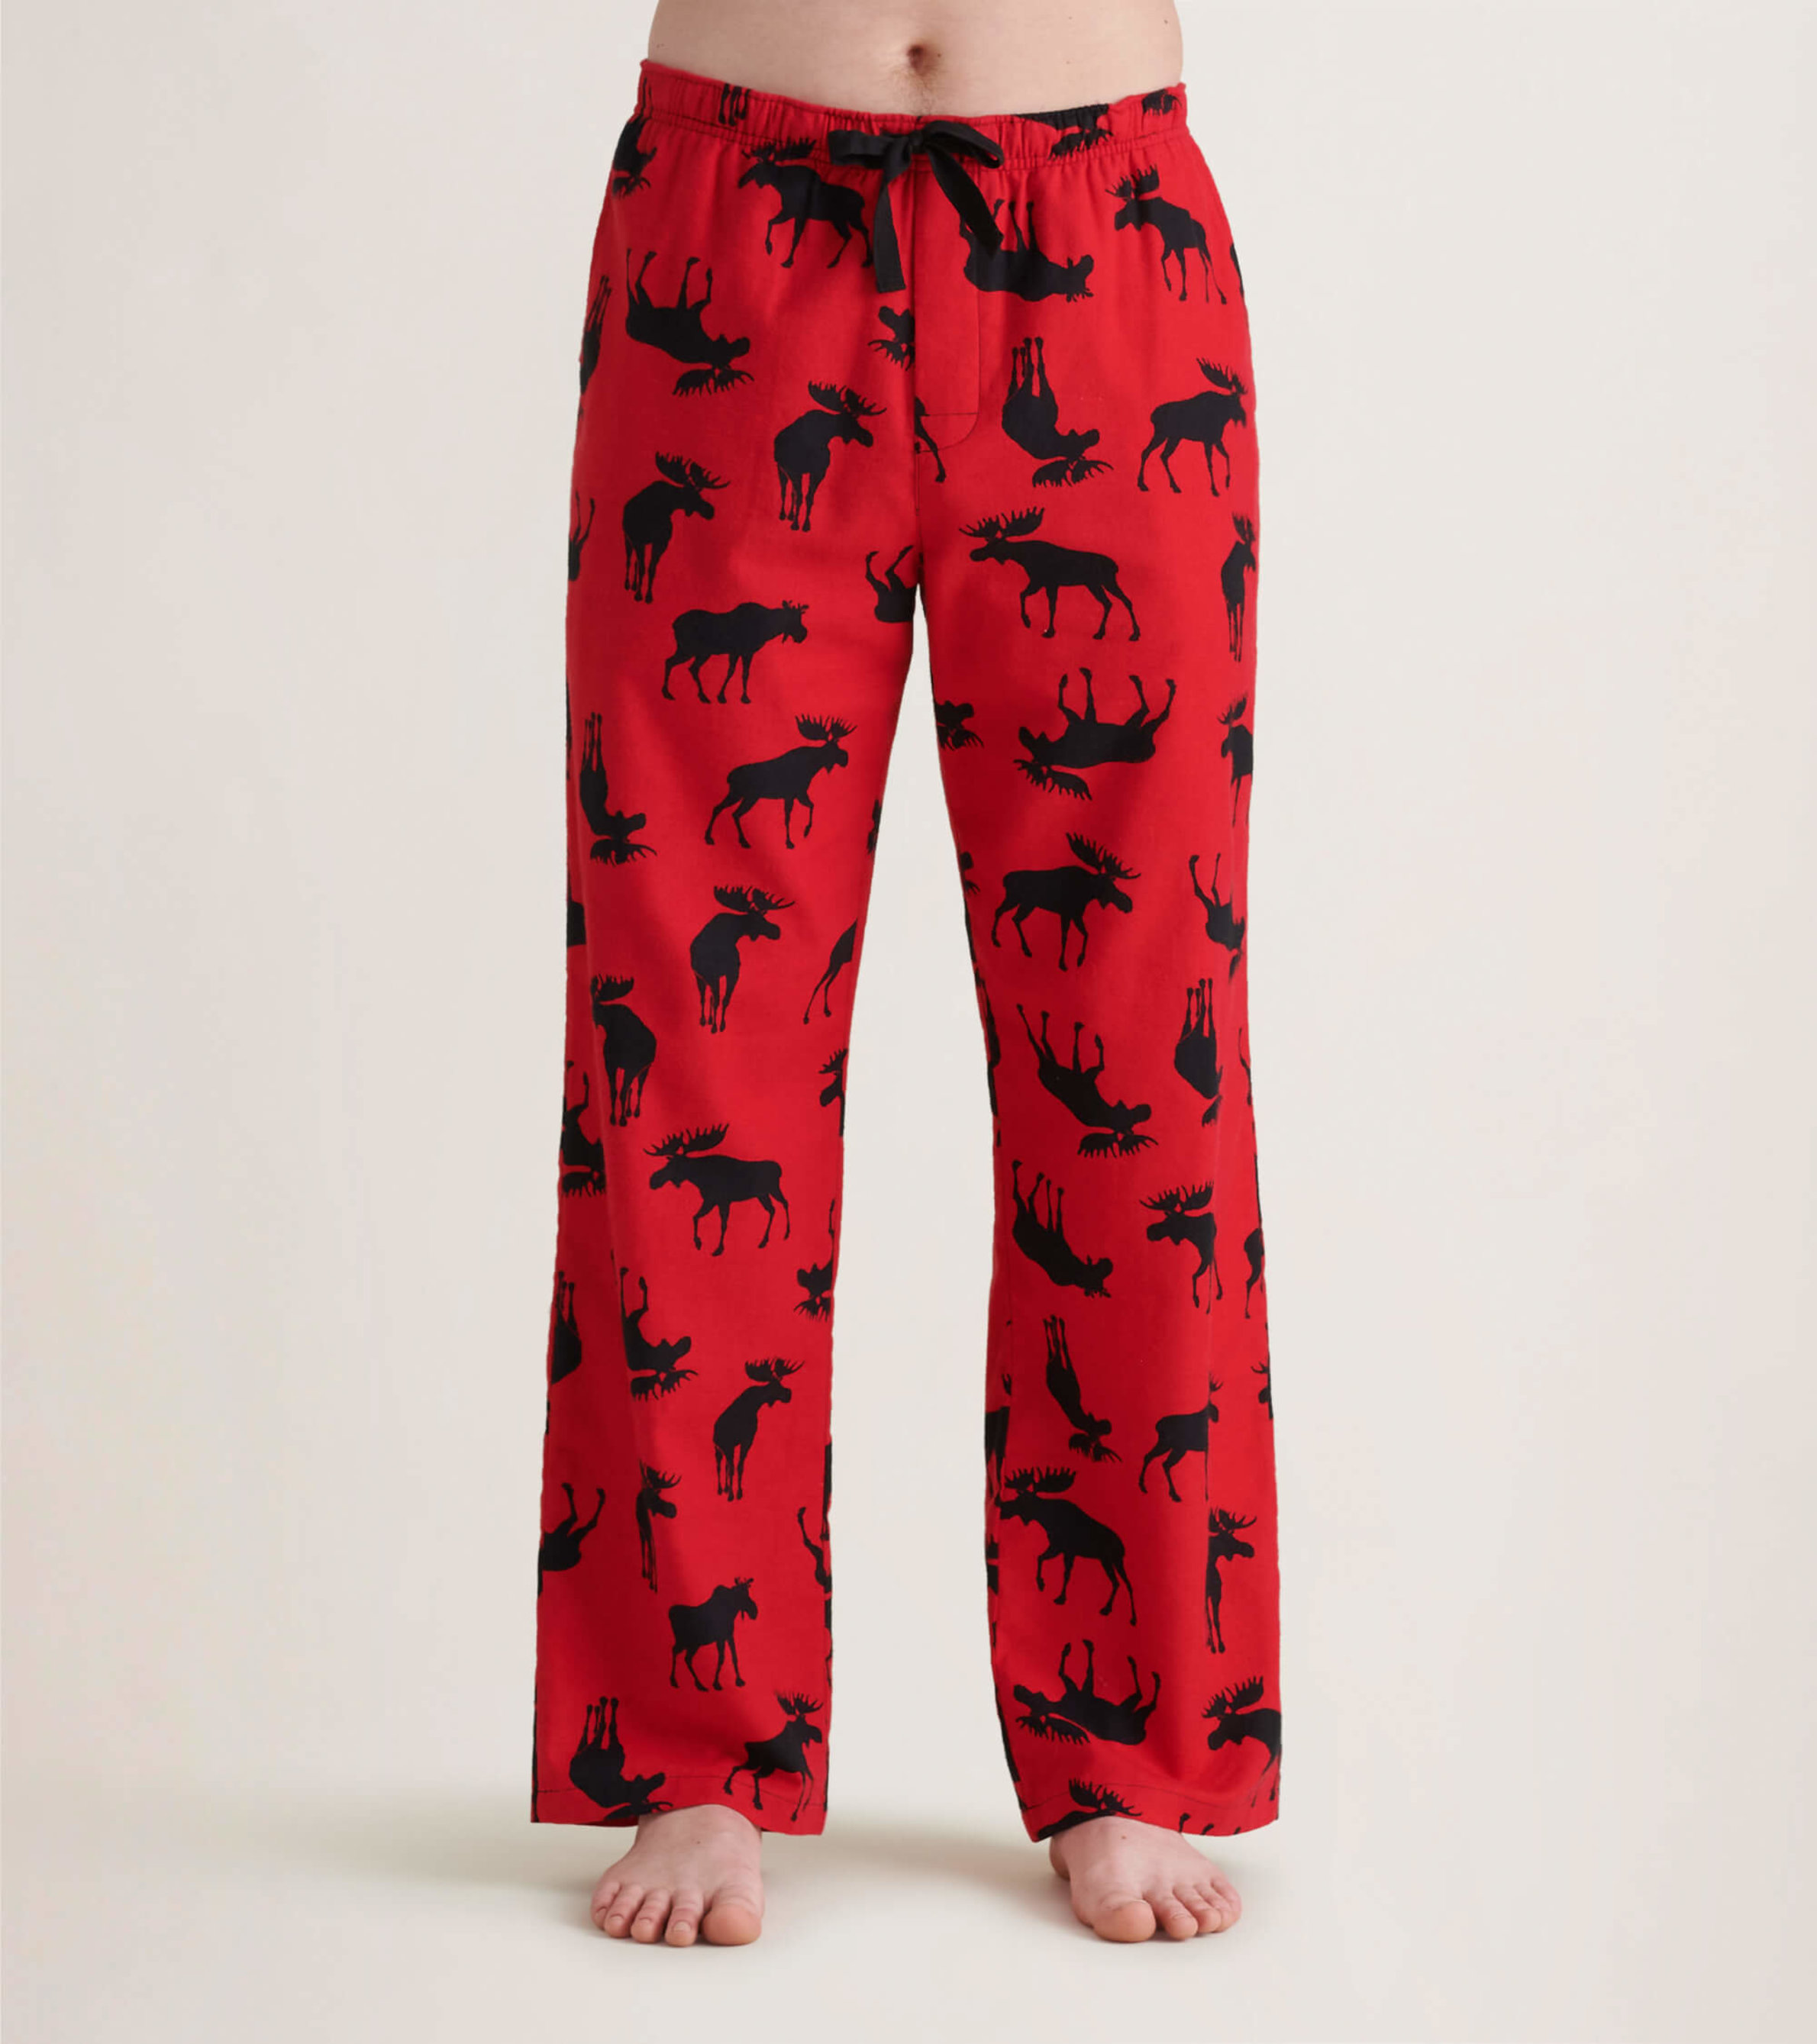 Men's Country Christmas Plaid Flannel Pajama Pants - Little Blue